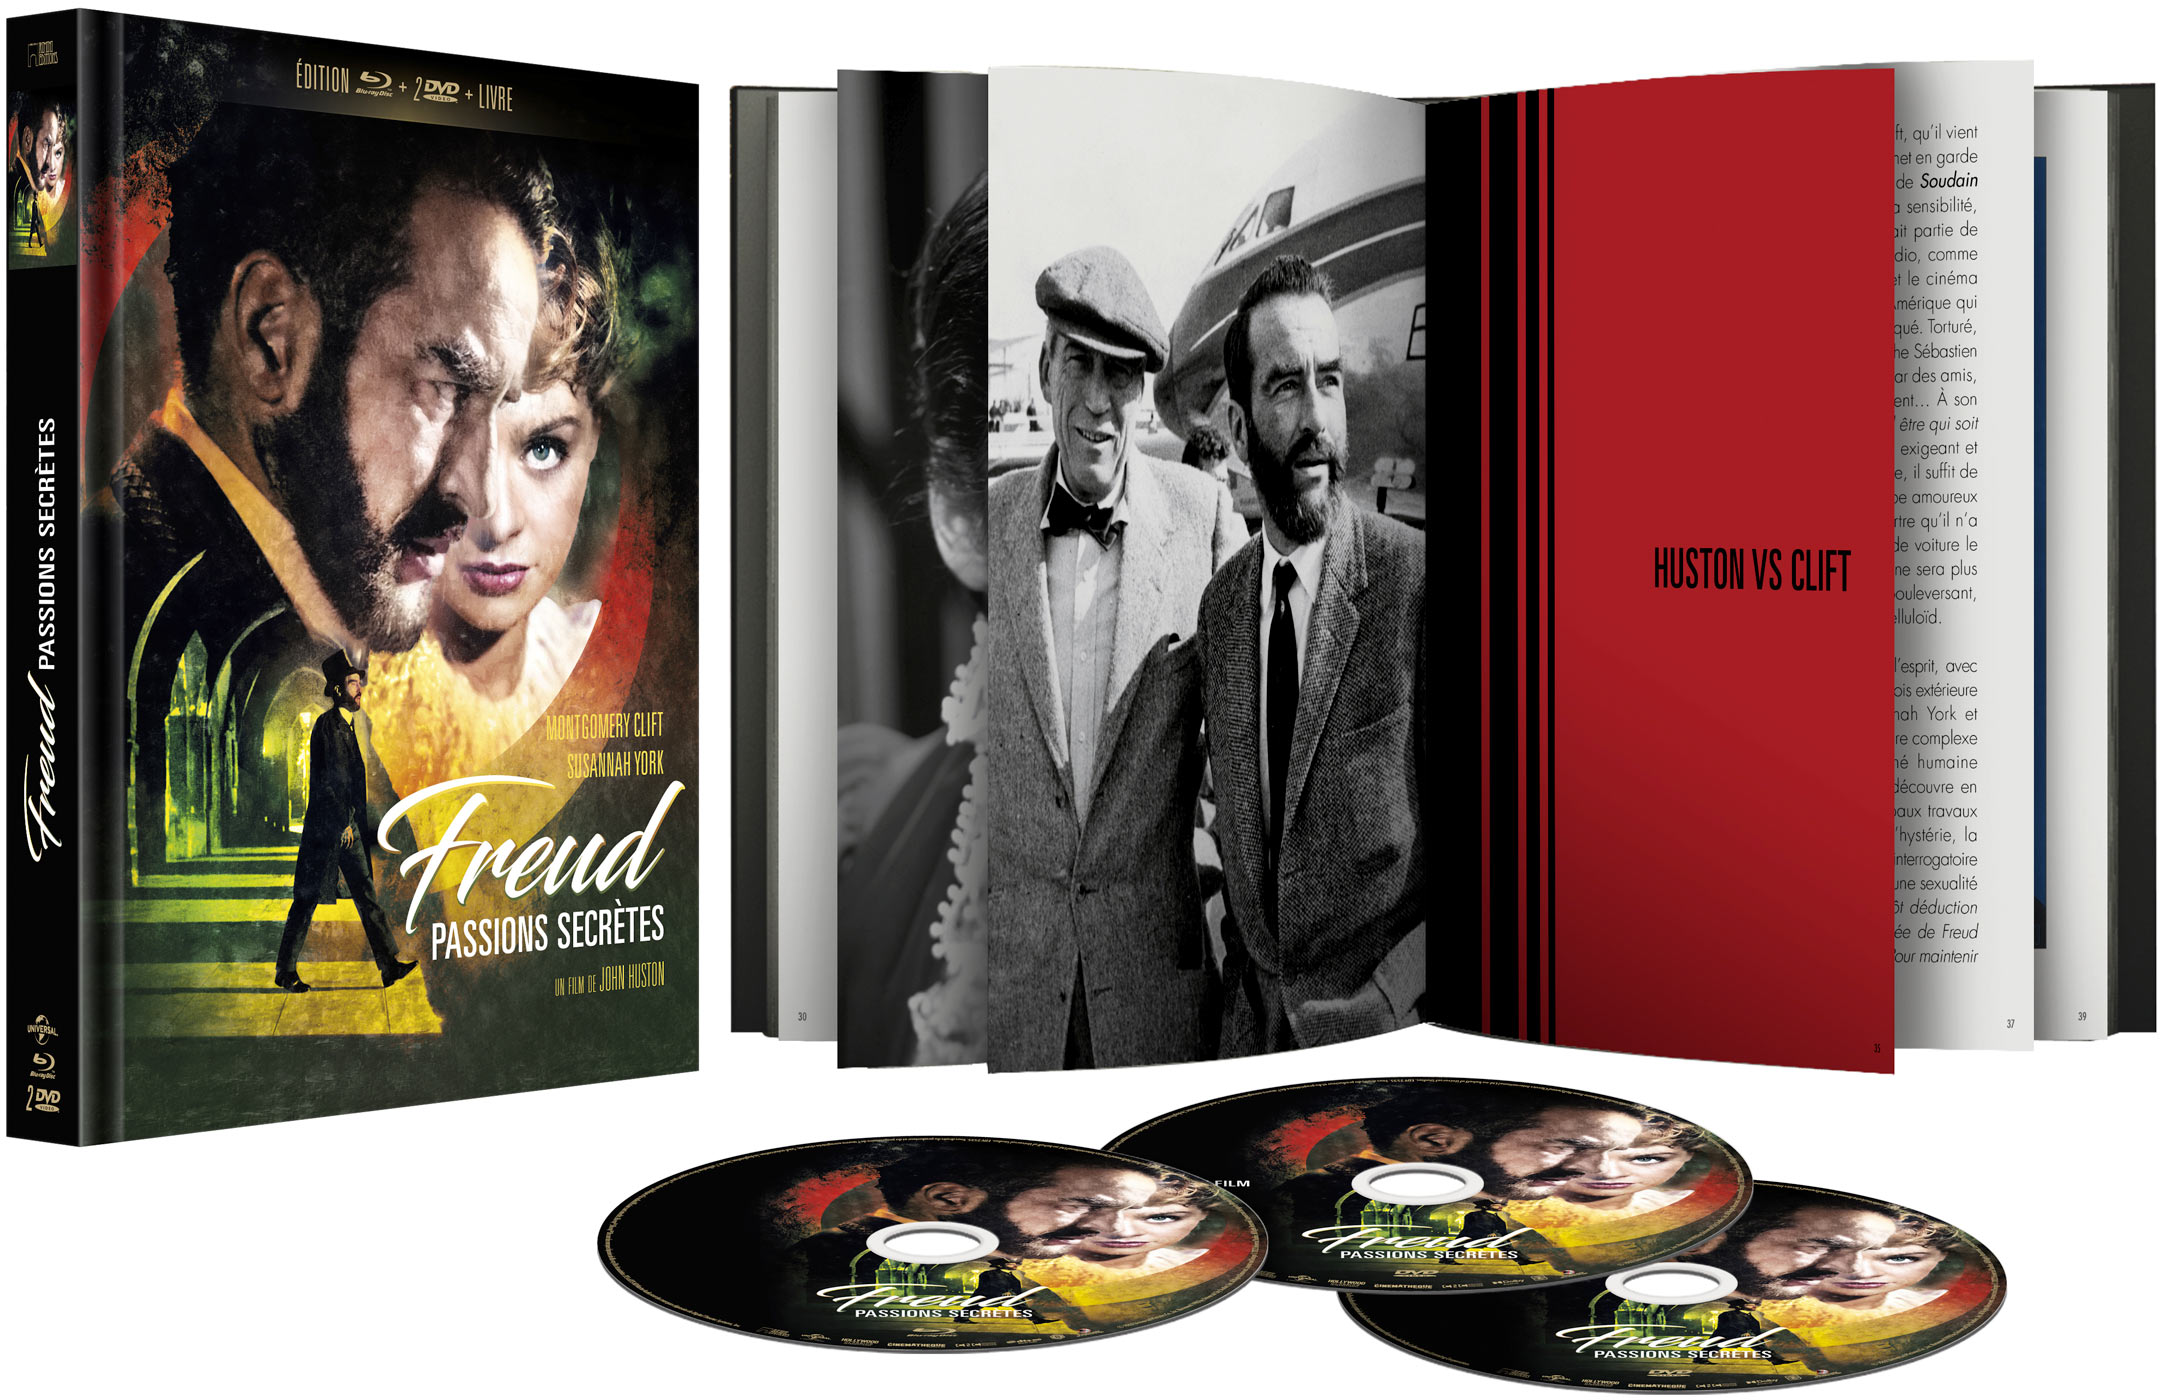 Freud, passions secrètes (1962) - Édition Blu-ray + DVD + DVD bonus + livre - Boîtier Mediabook